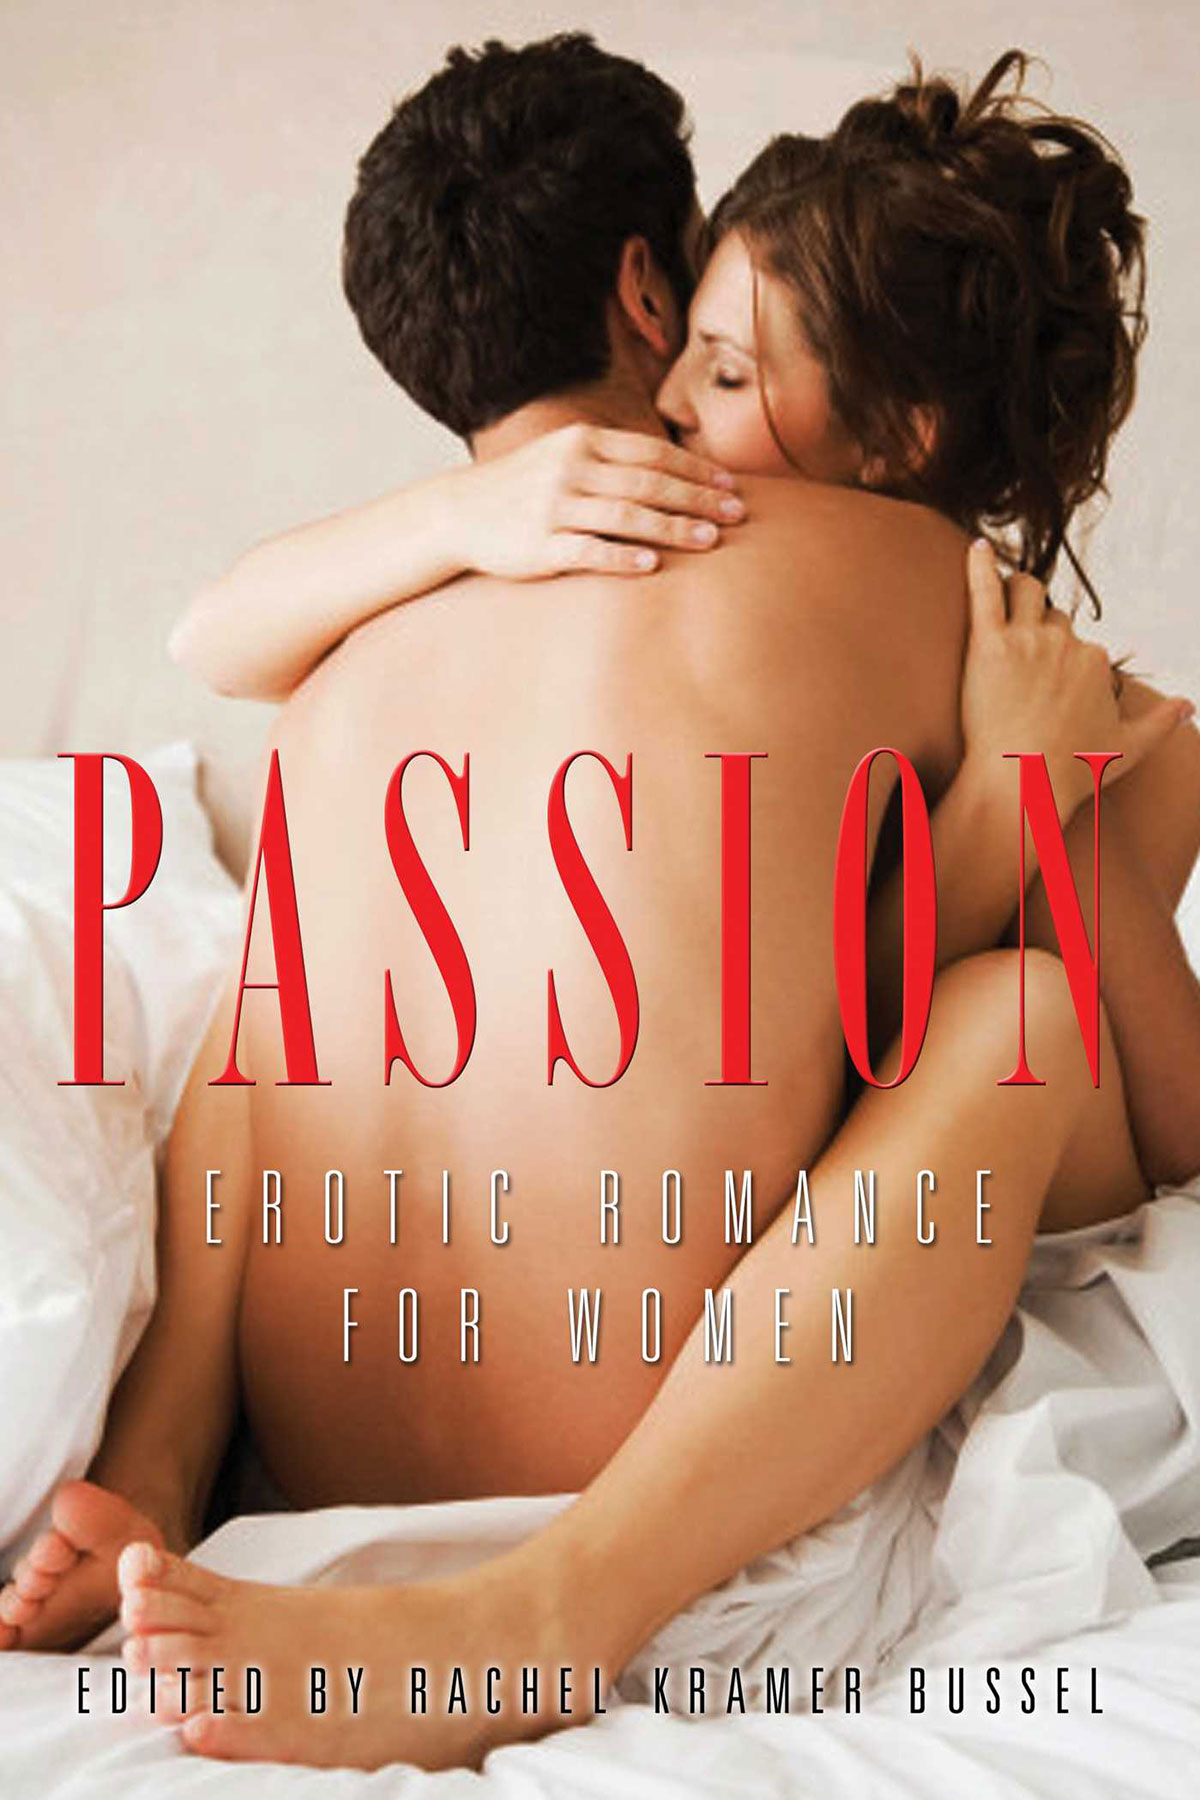 Passion: Erotic Romance for Women by Rachel Kramer Bussel (Editor)